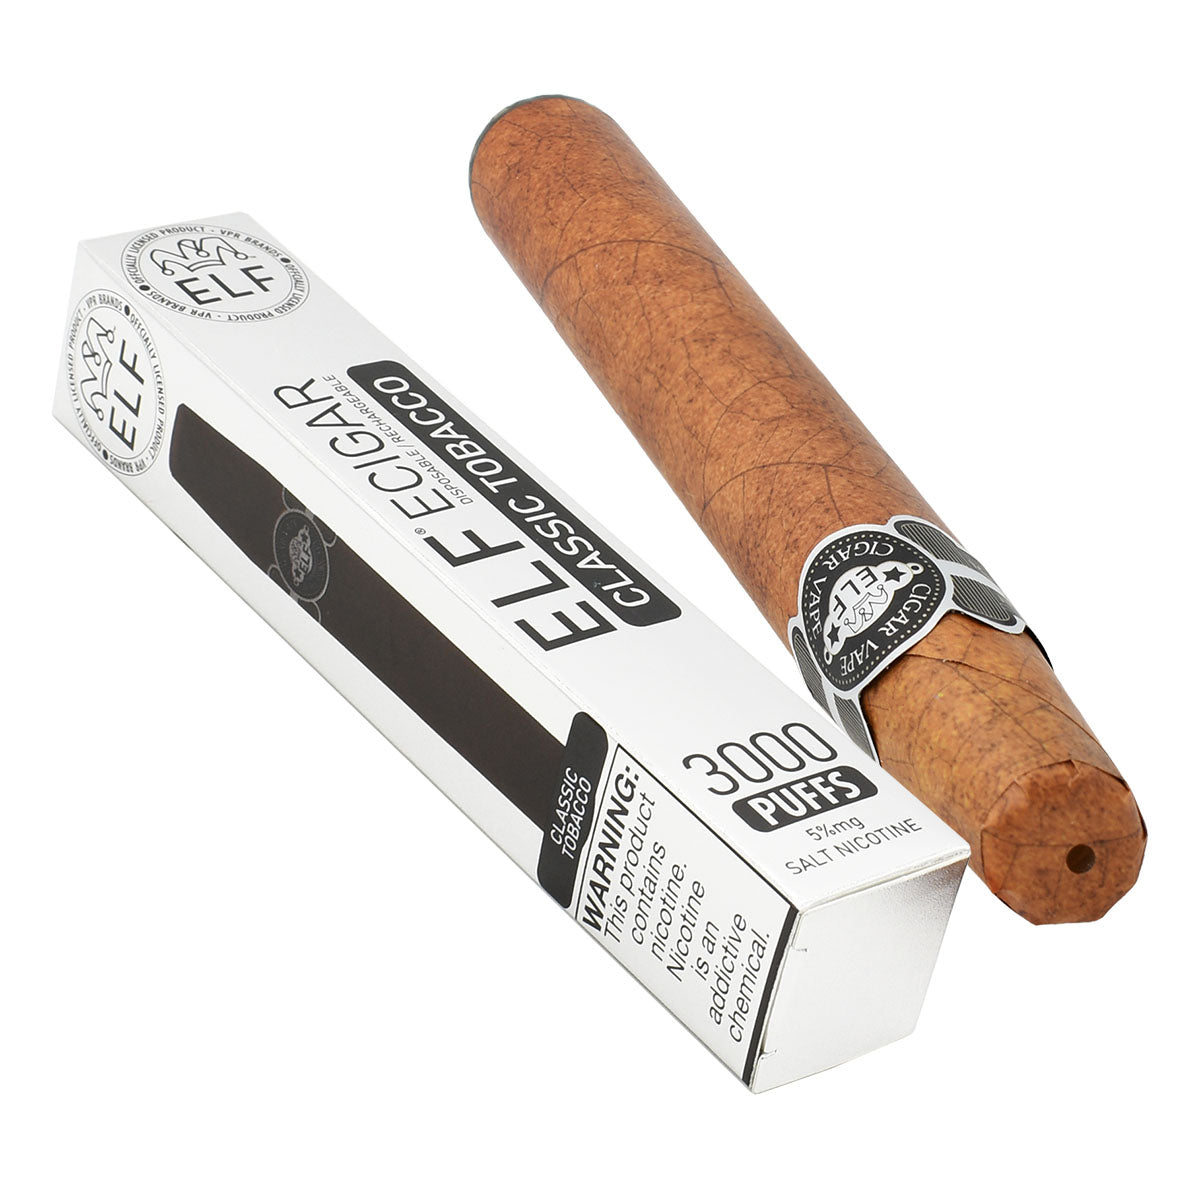 Elf Cigar Vape Disposable - 3000 Classic Tobacco Puffs